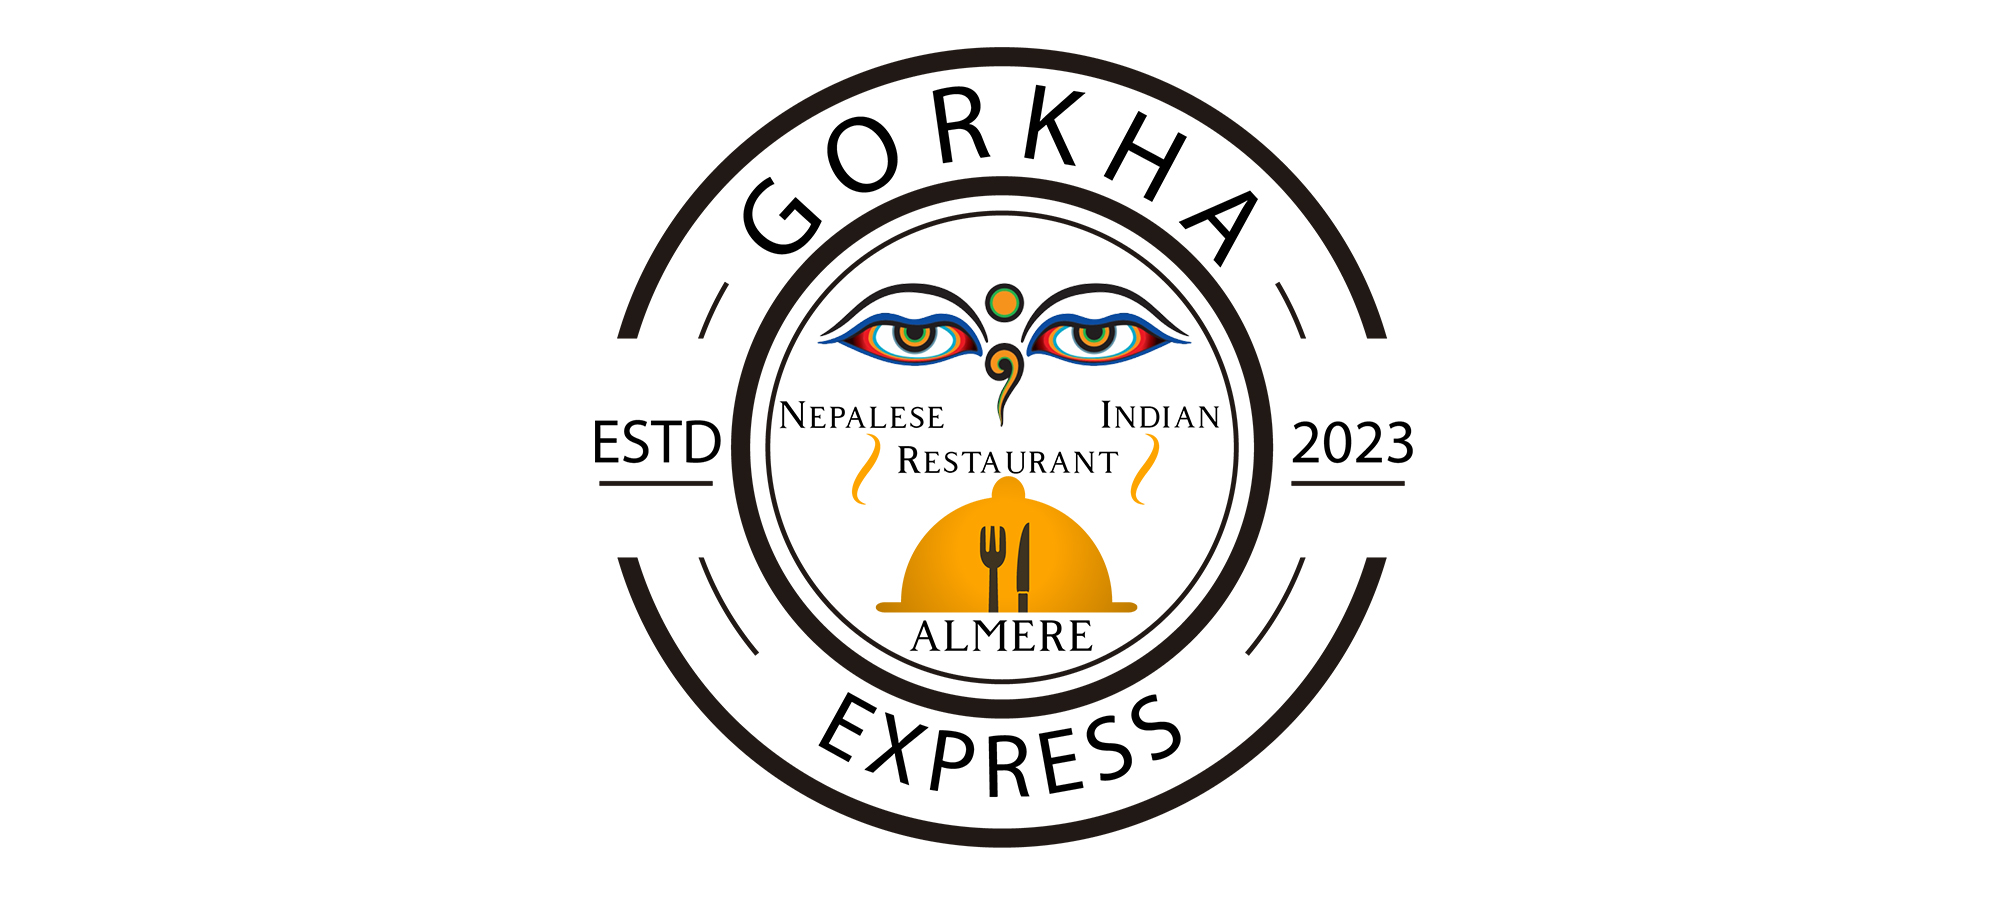 Gorkha Express